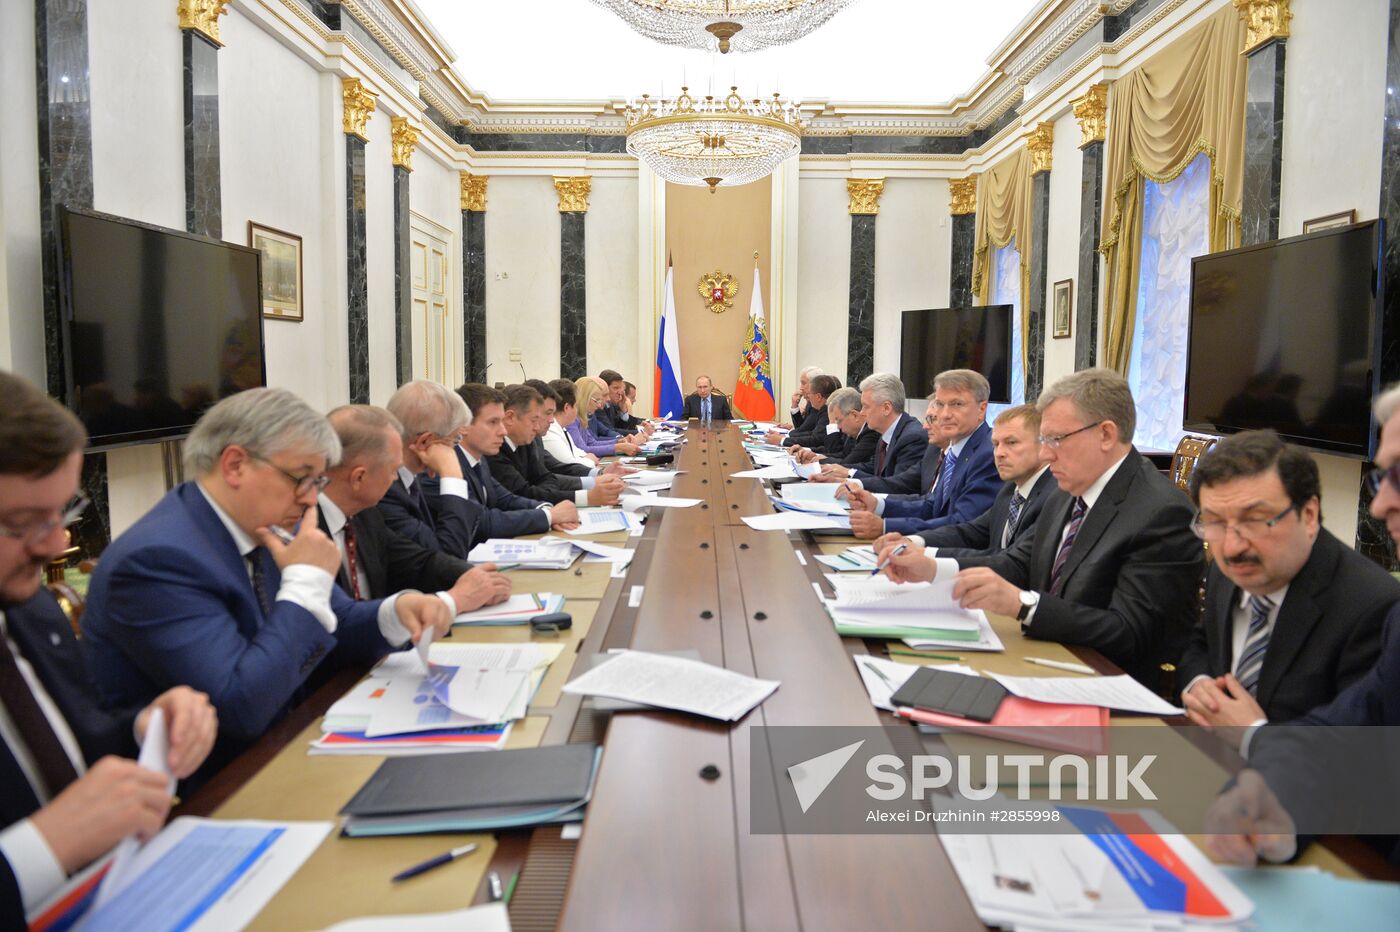 President Vladimir Putin holds meeting of Economic Council's Presidium